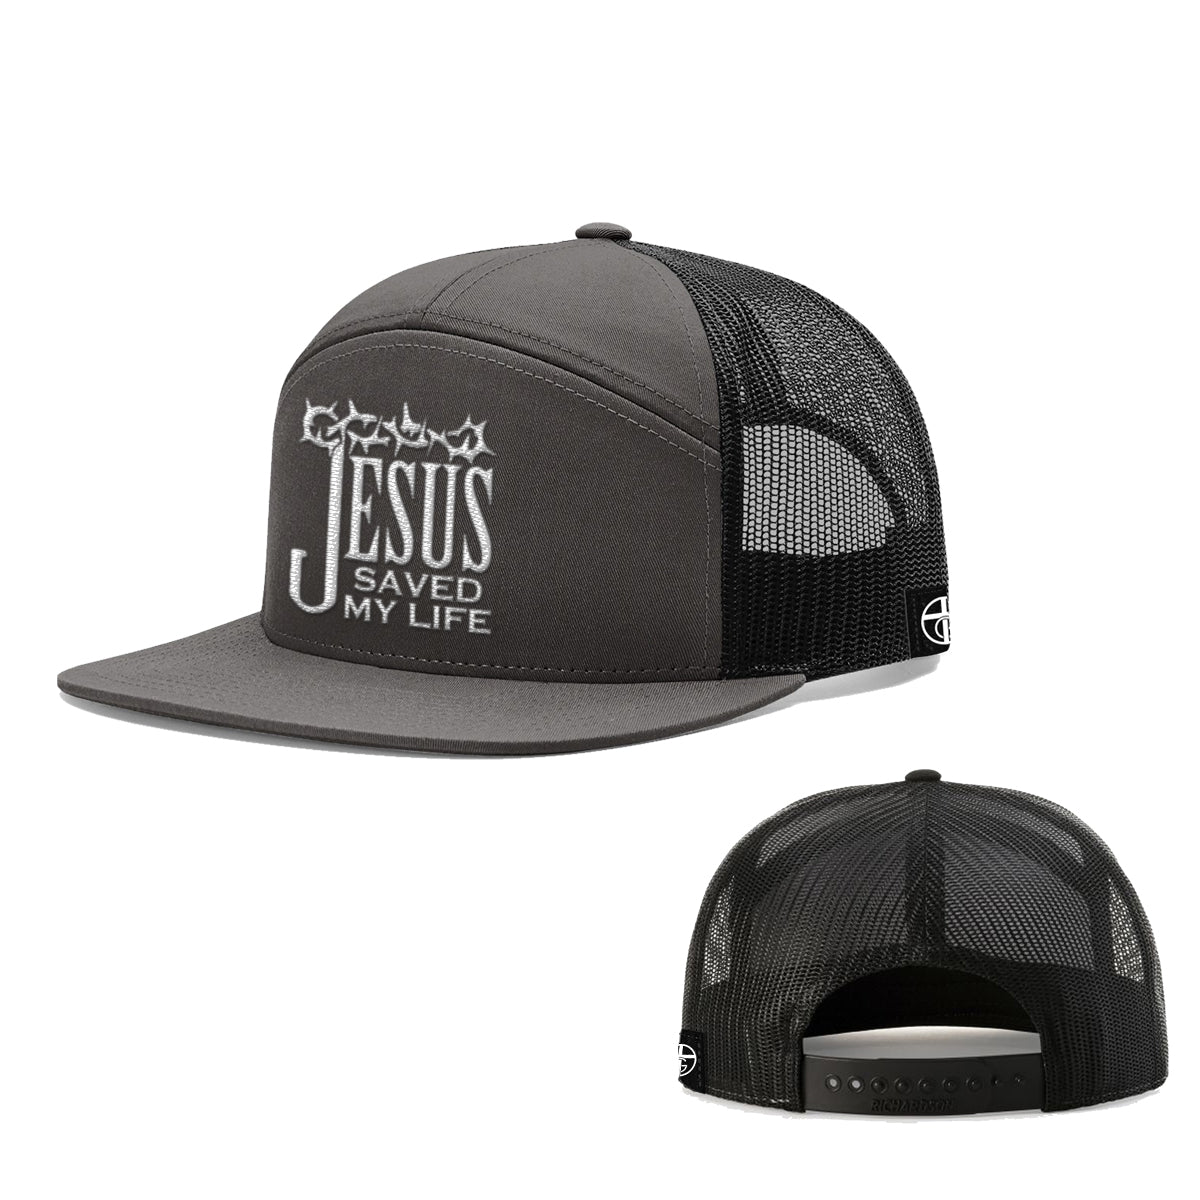 Jesus Saved My Life 7 Panel Hats